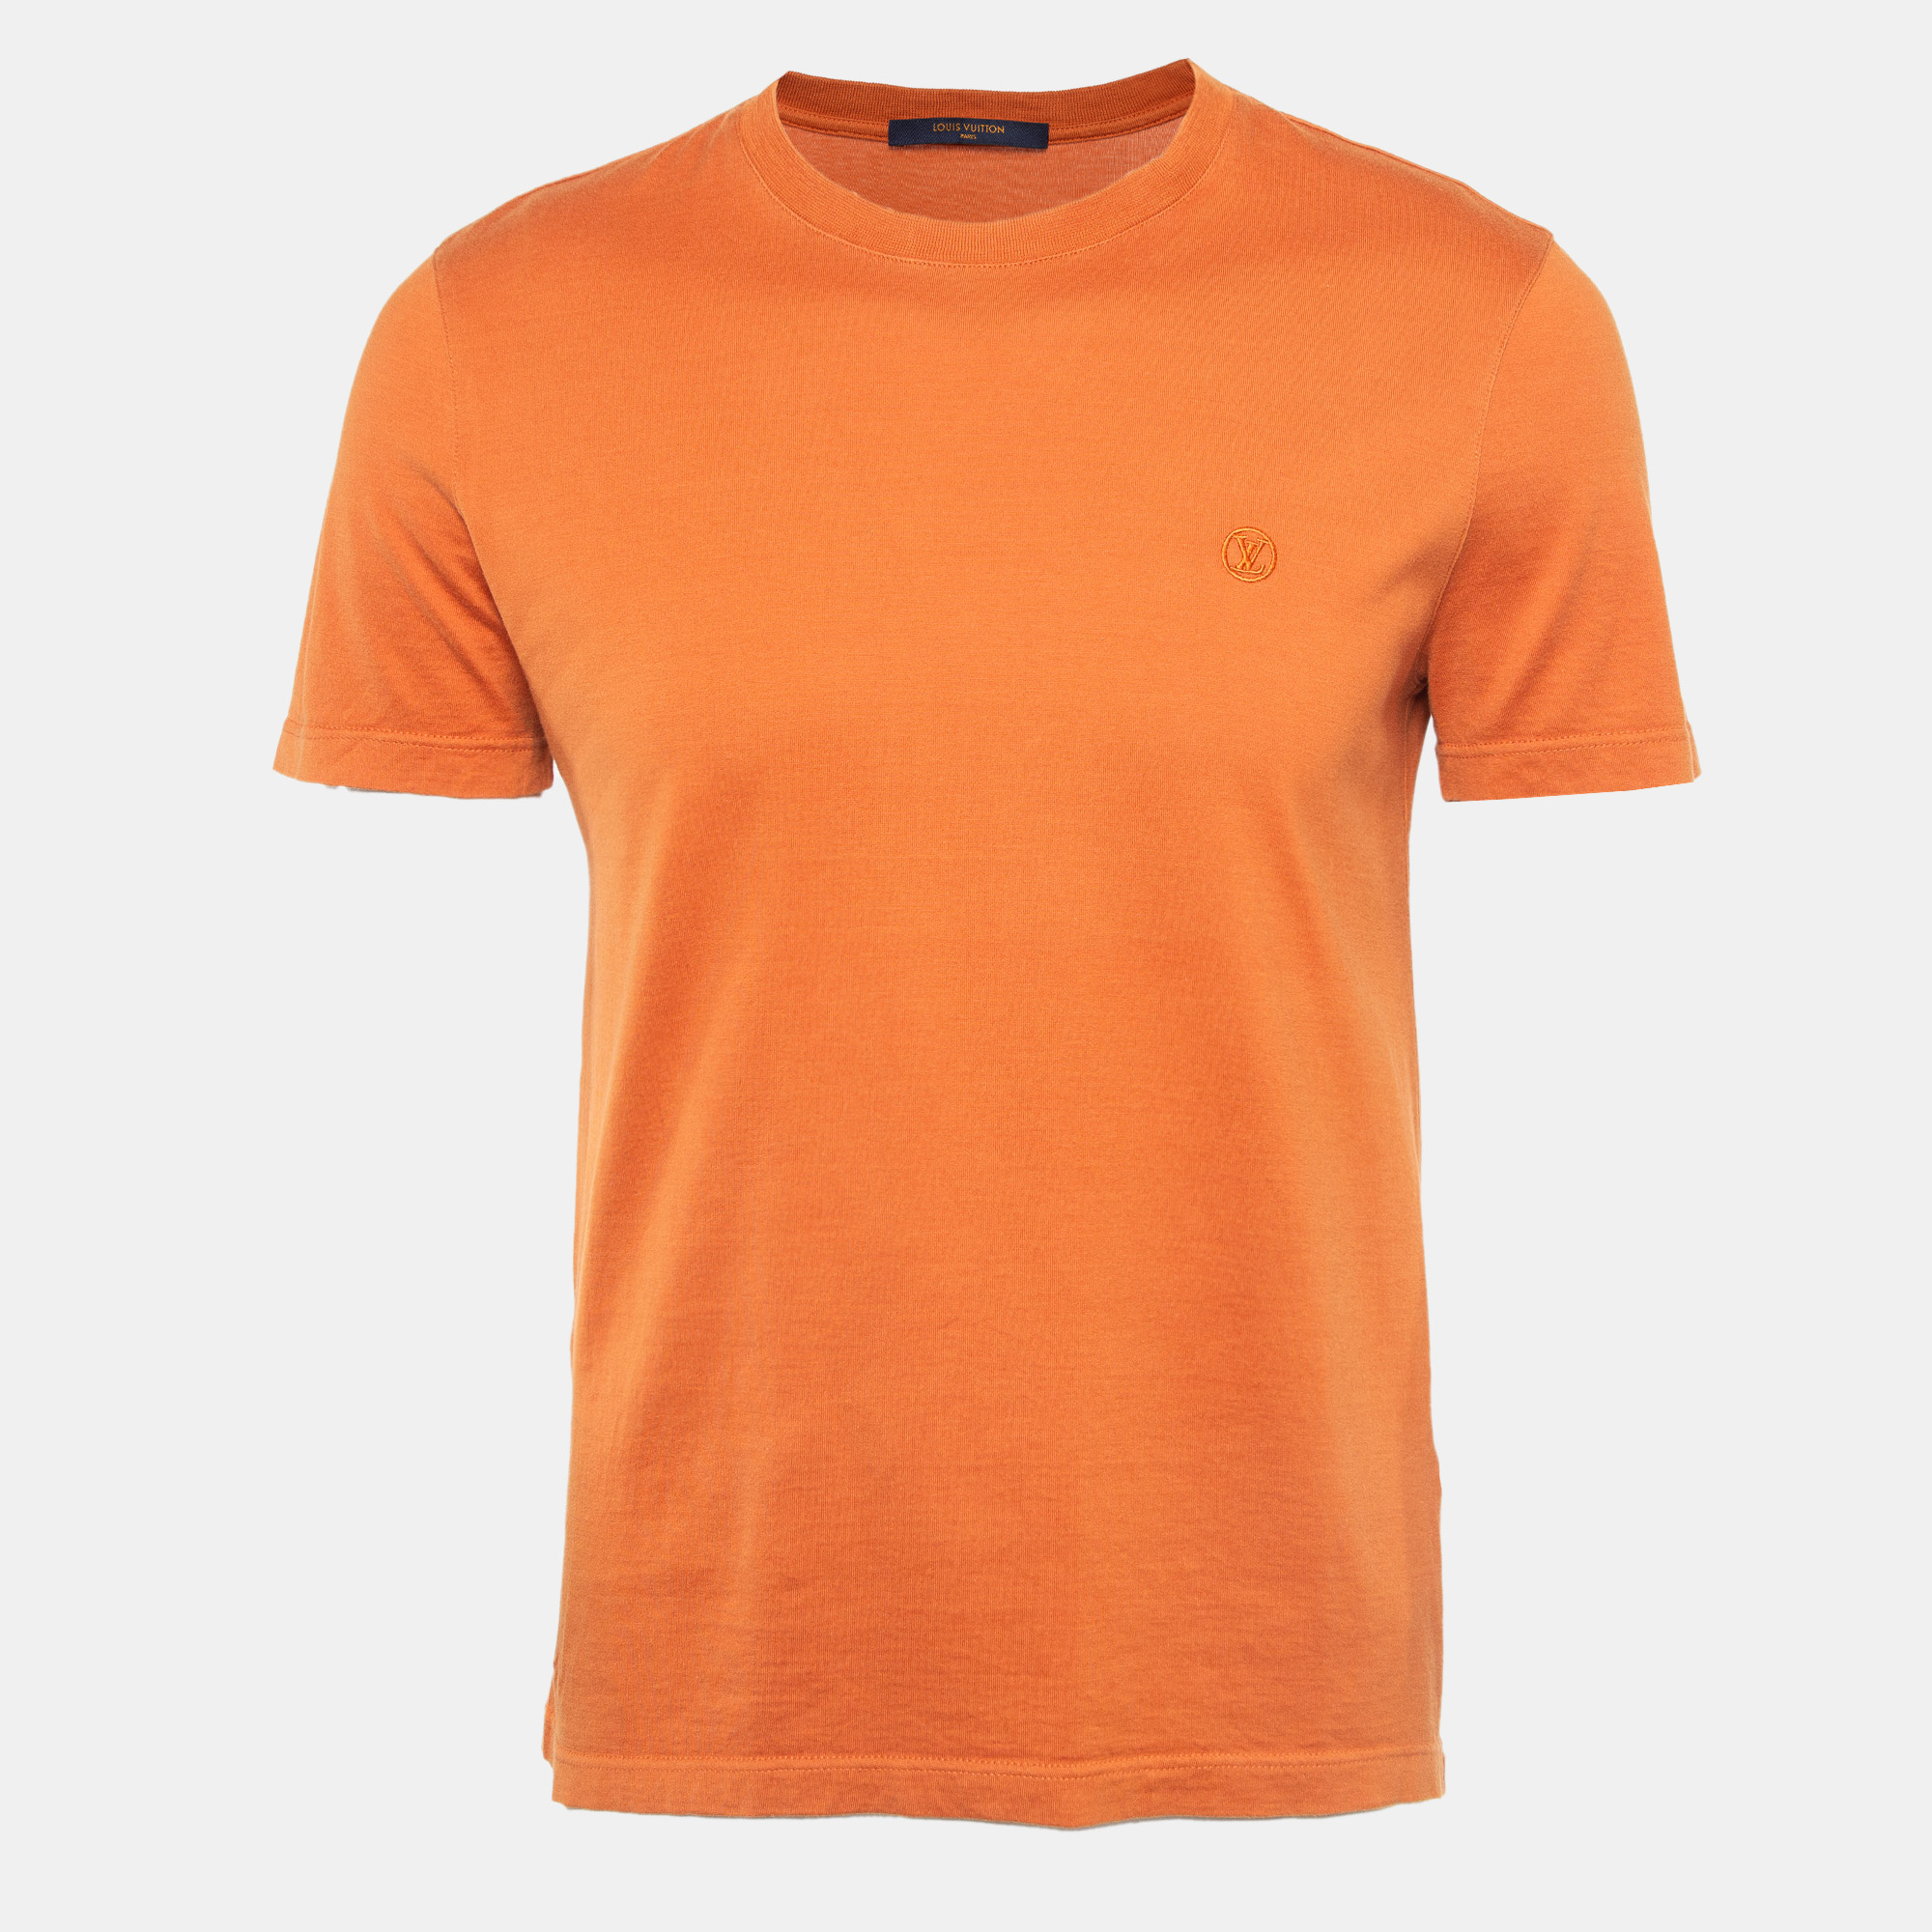 Louis vuitton orange logo embroidered cotton crew neck t-shirt m